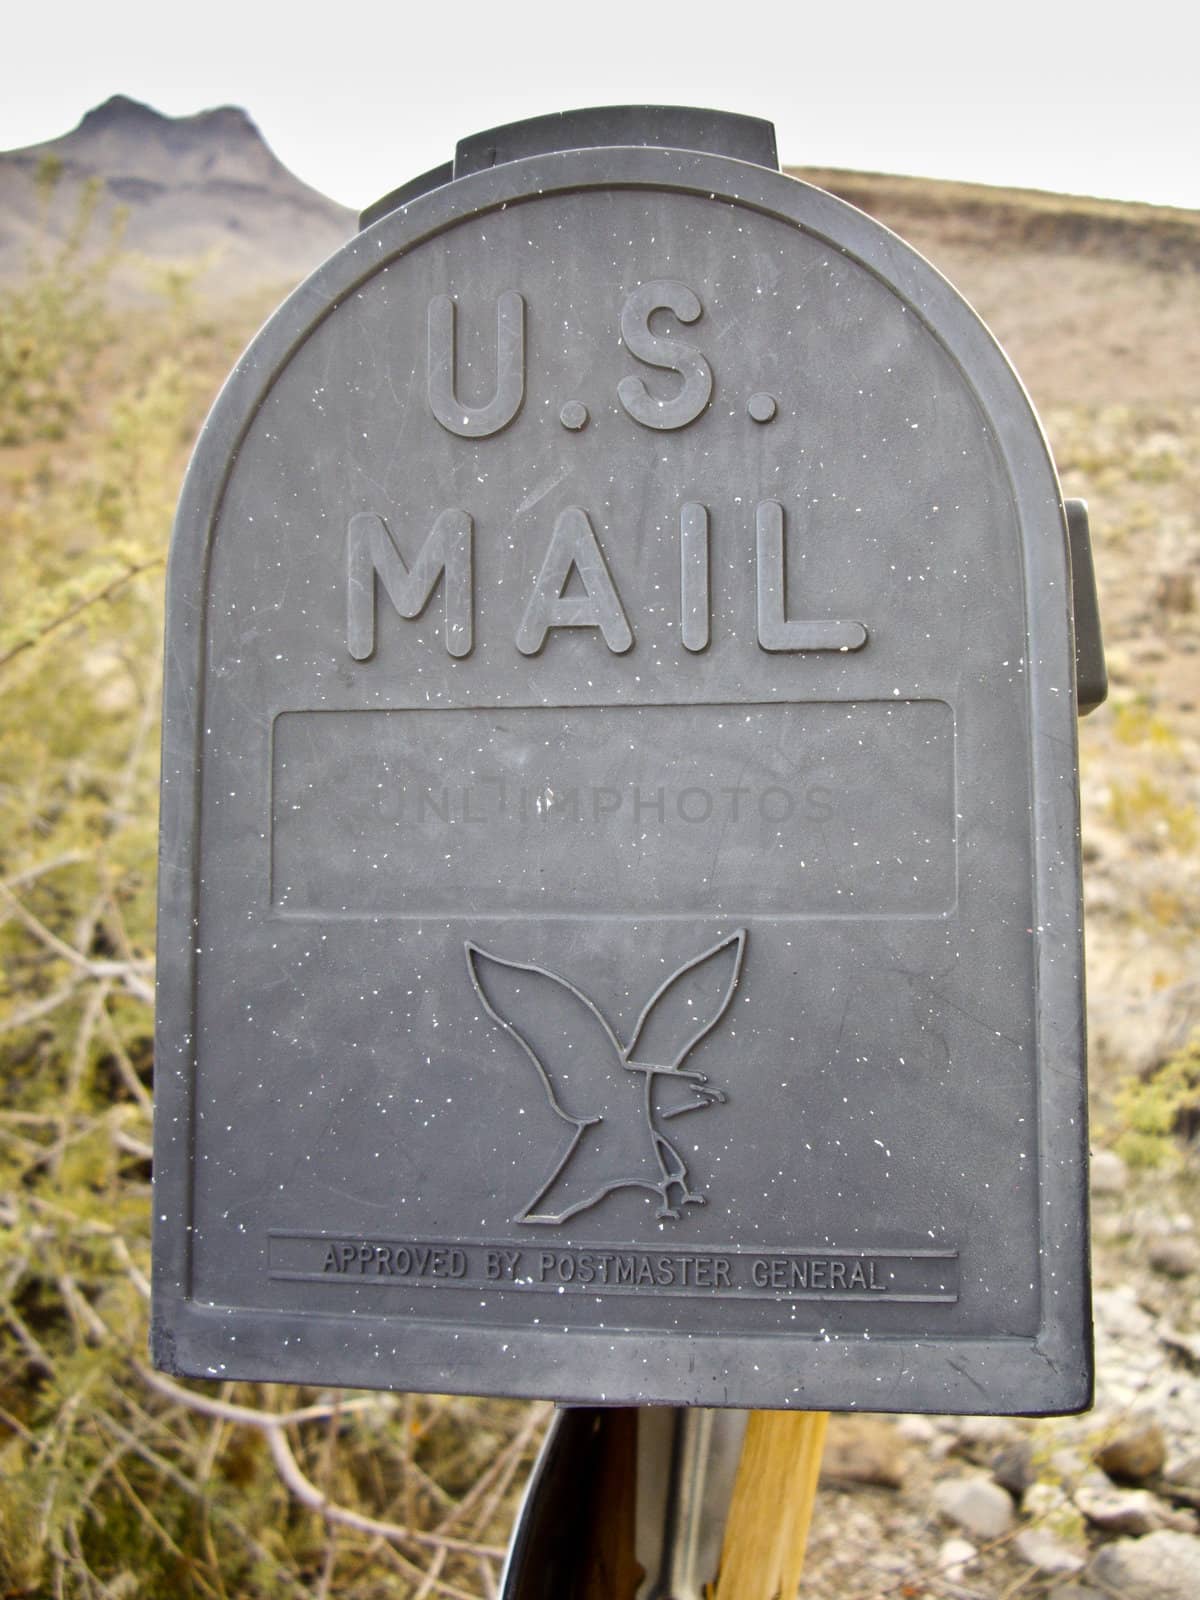 US Mail Box by emattil